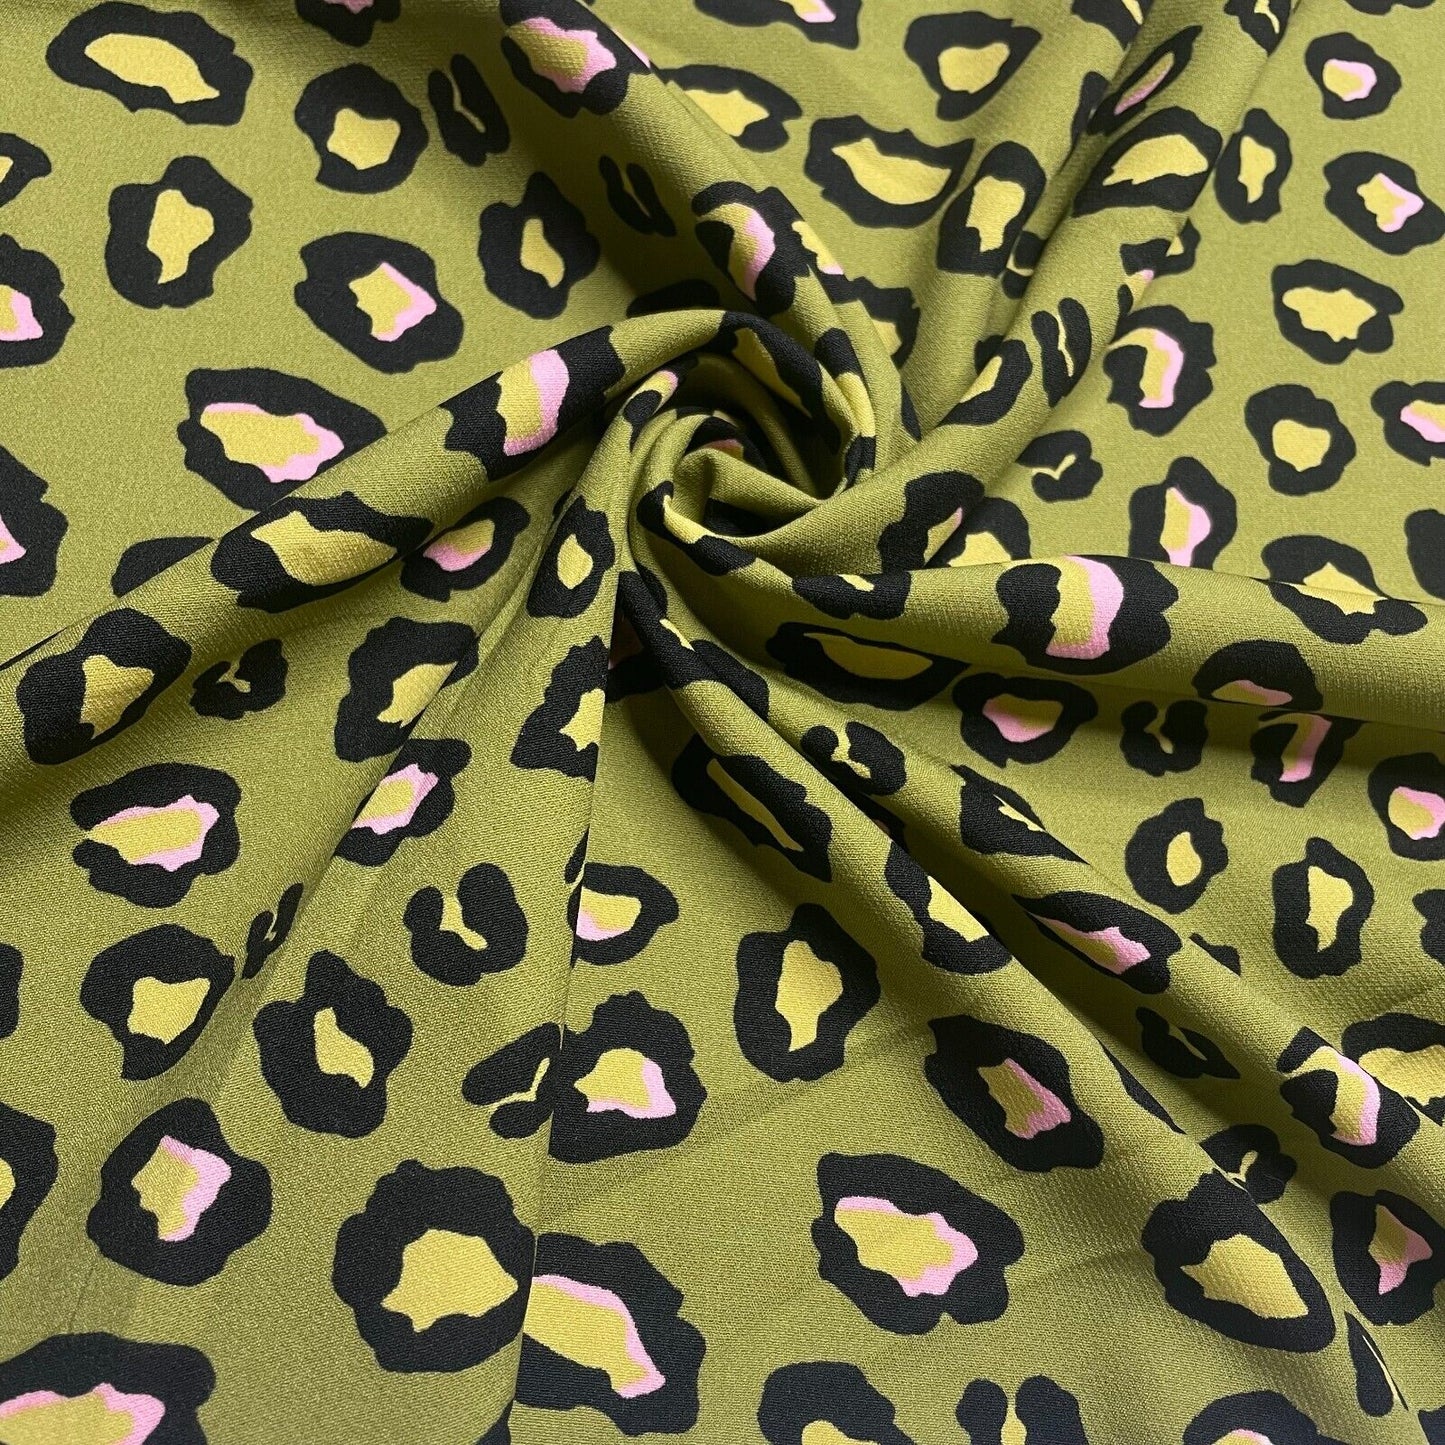 Woven Dressmaking Fabric Leopard Print 4 Way Stretch 55" Wide